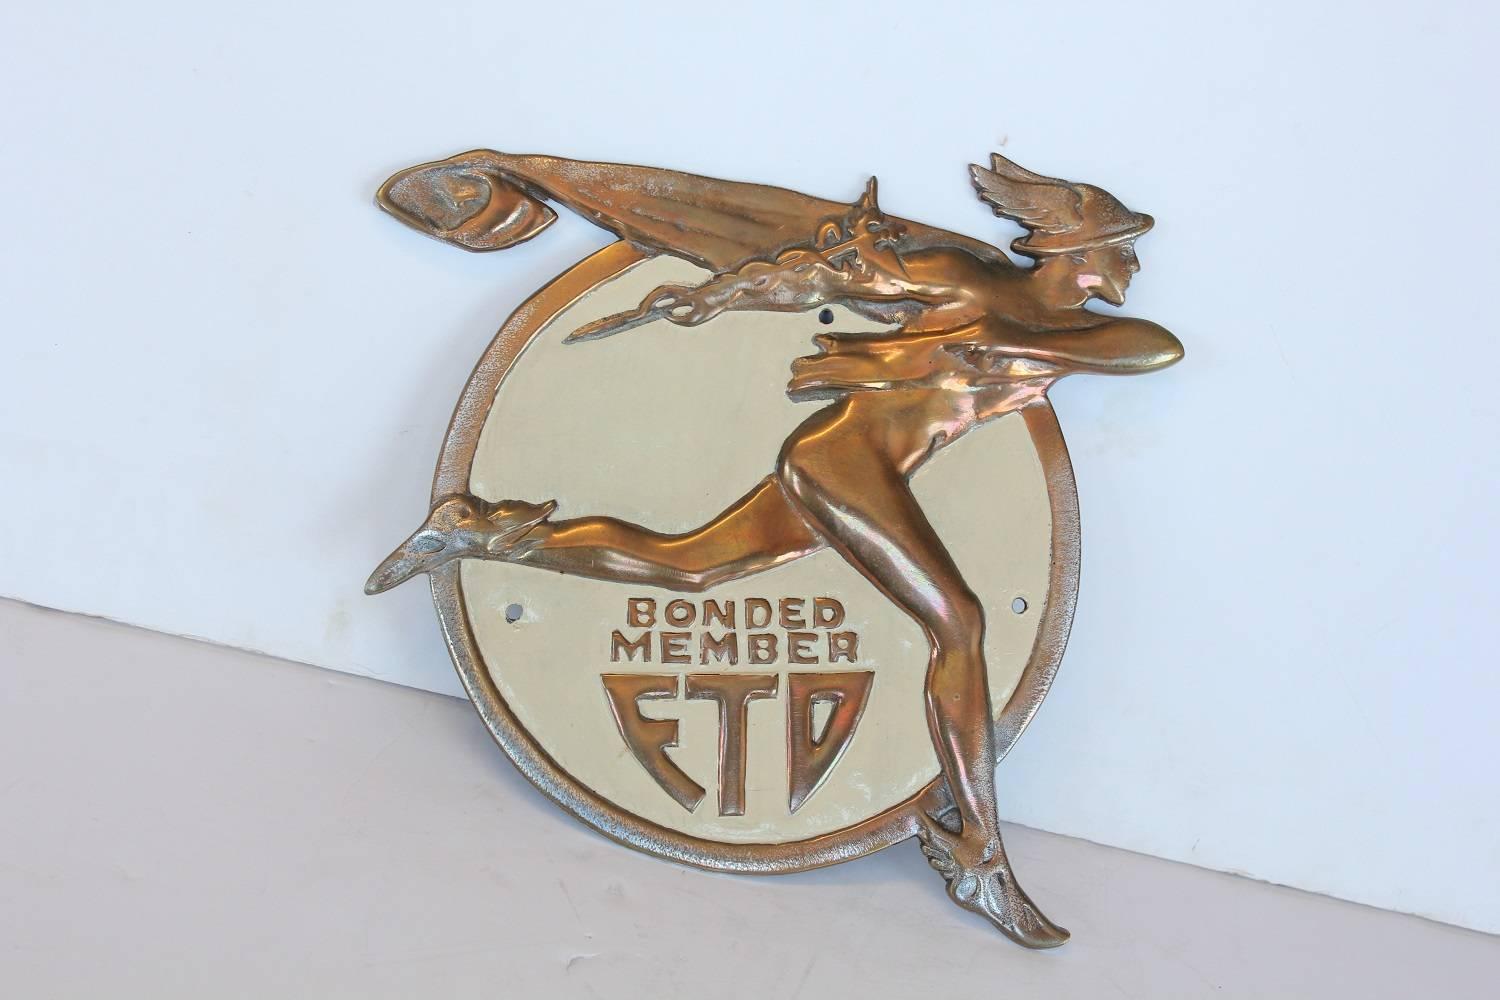 1930s American FTD truck medallion.